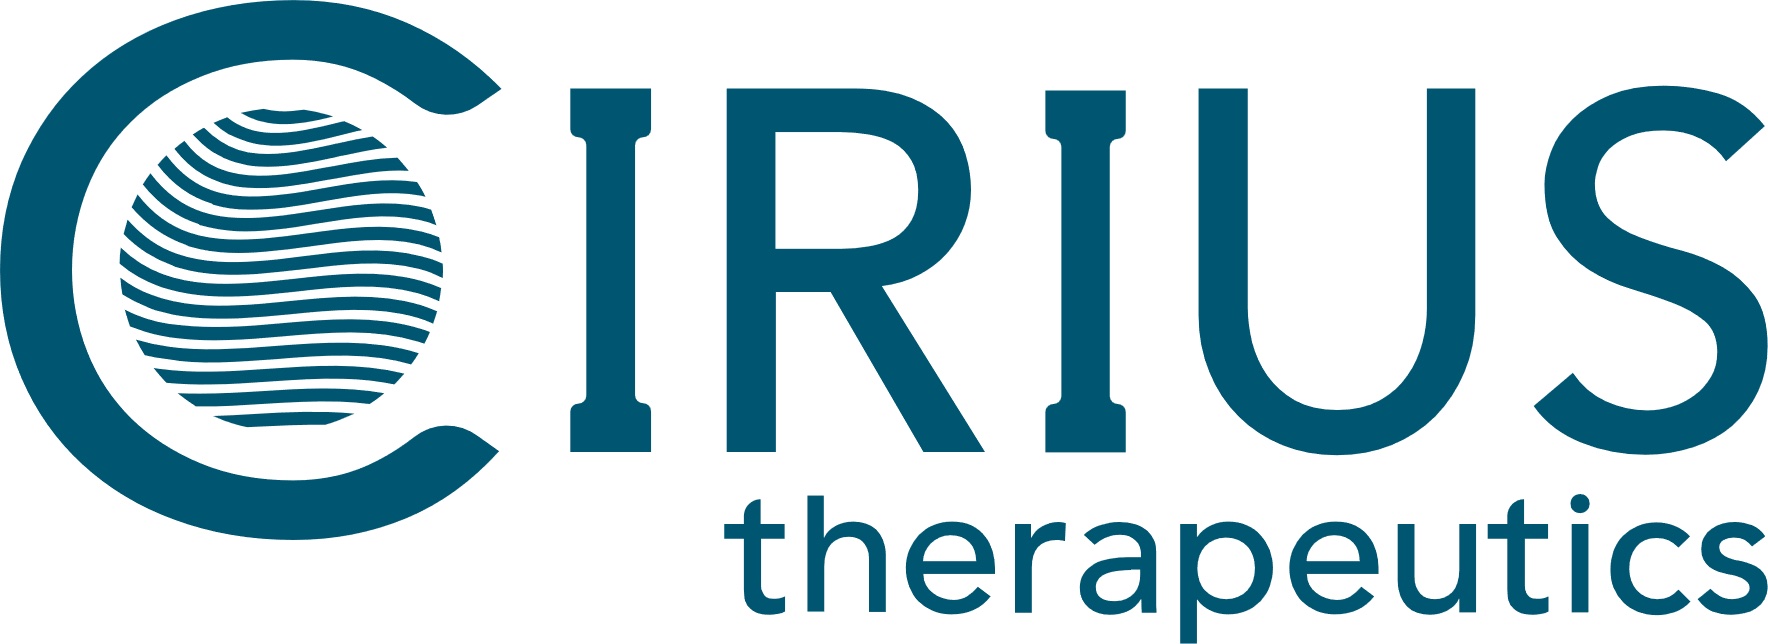 Cirius Therapeutics.jpg